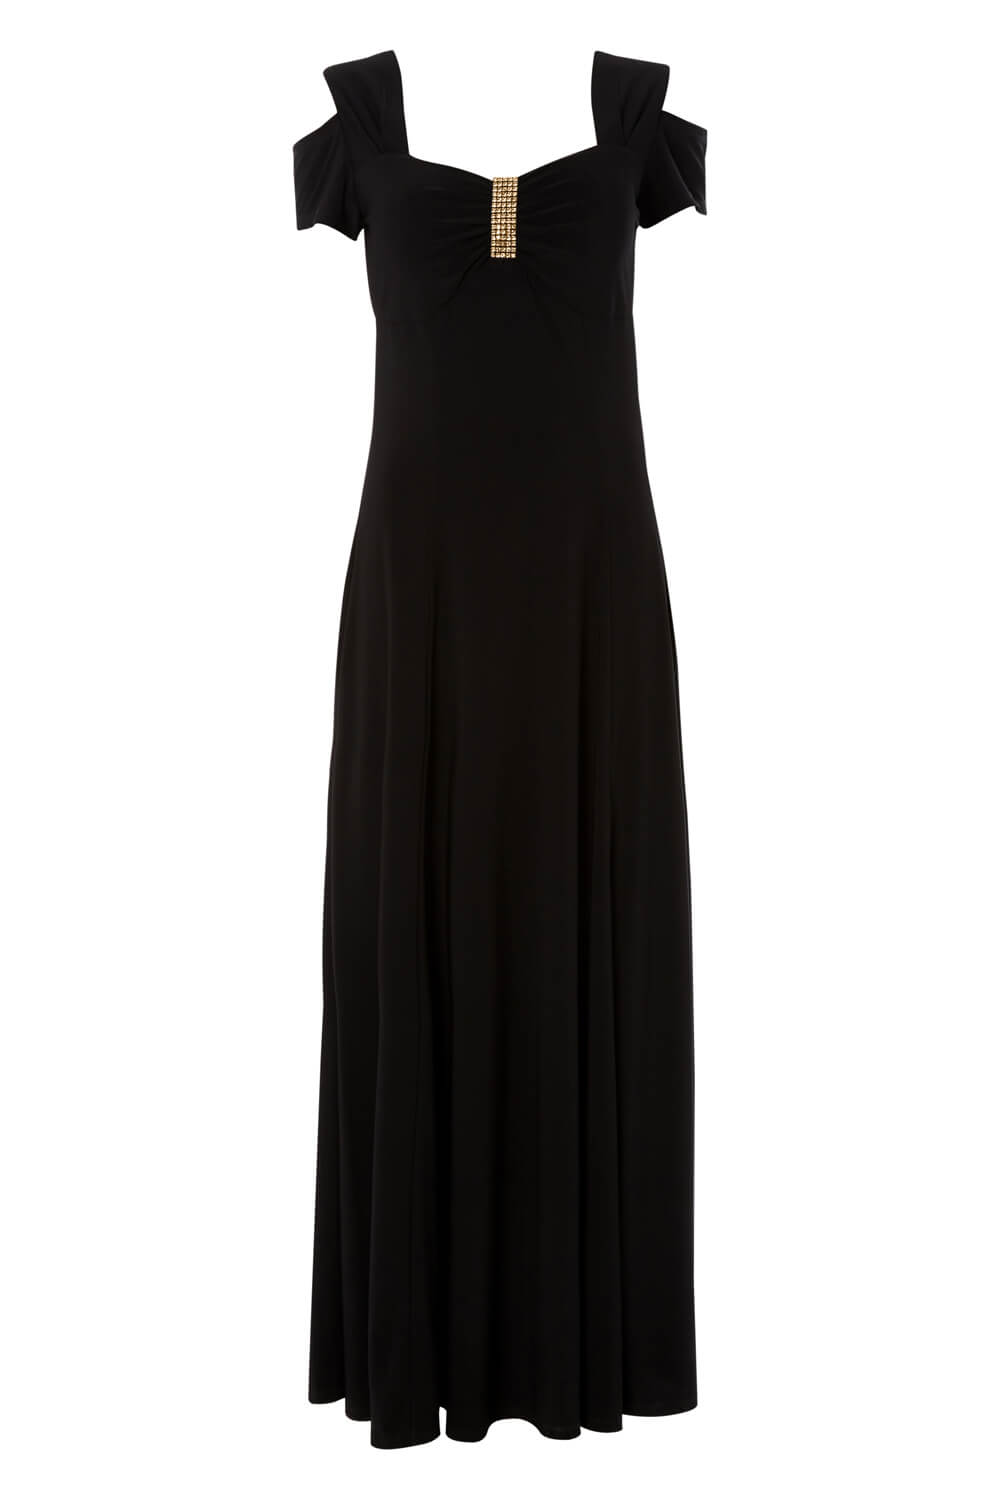 Black Gold Diamante Cold Shoulder Maxi Dress, Image 4 of 4